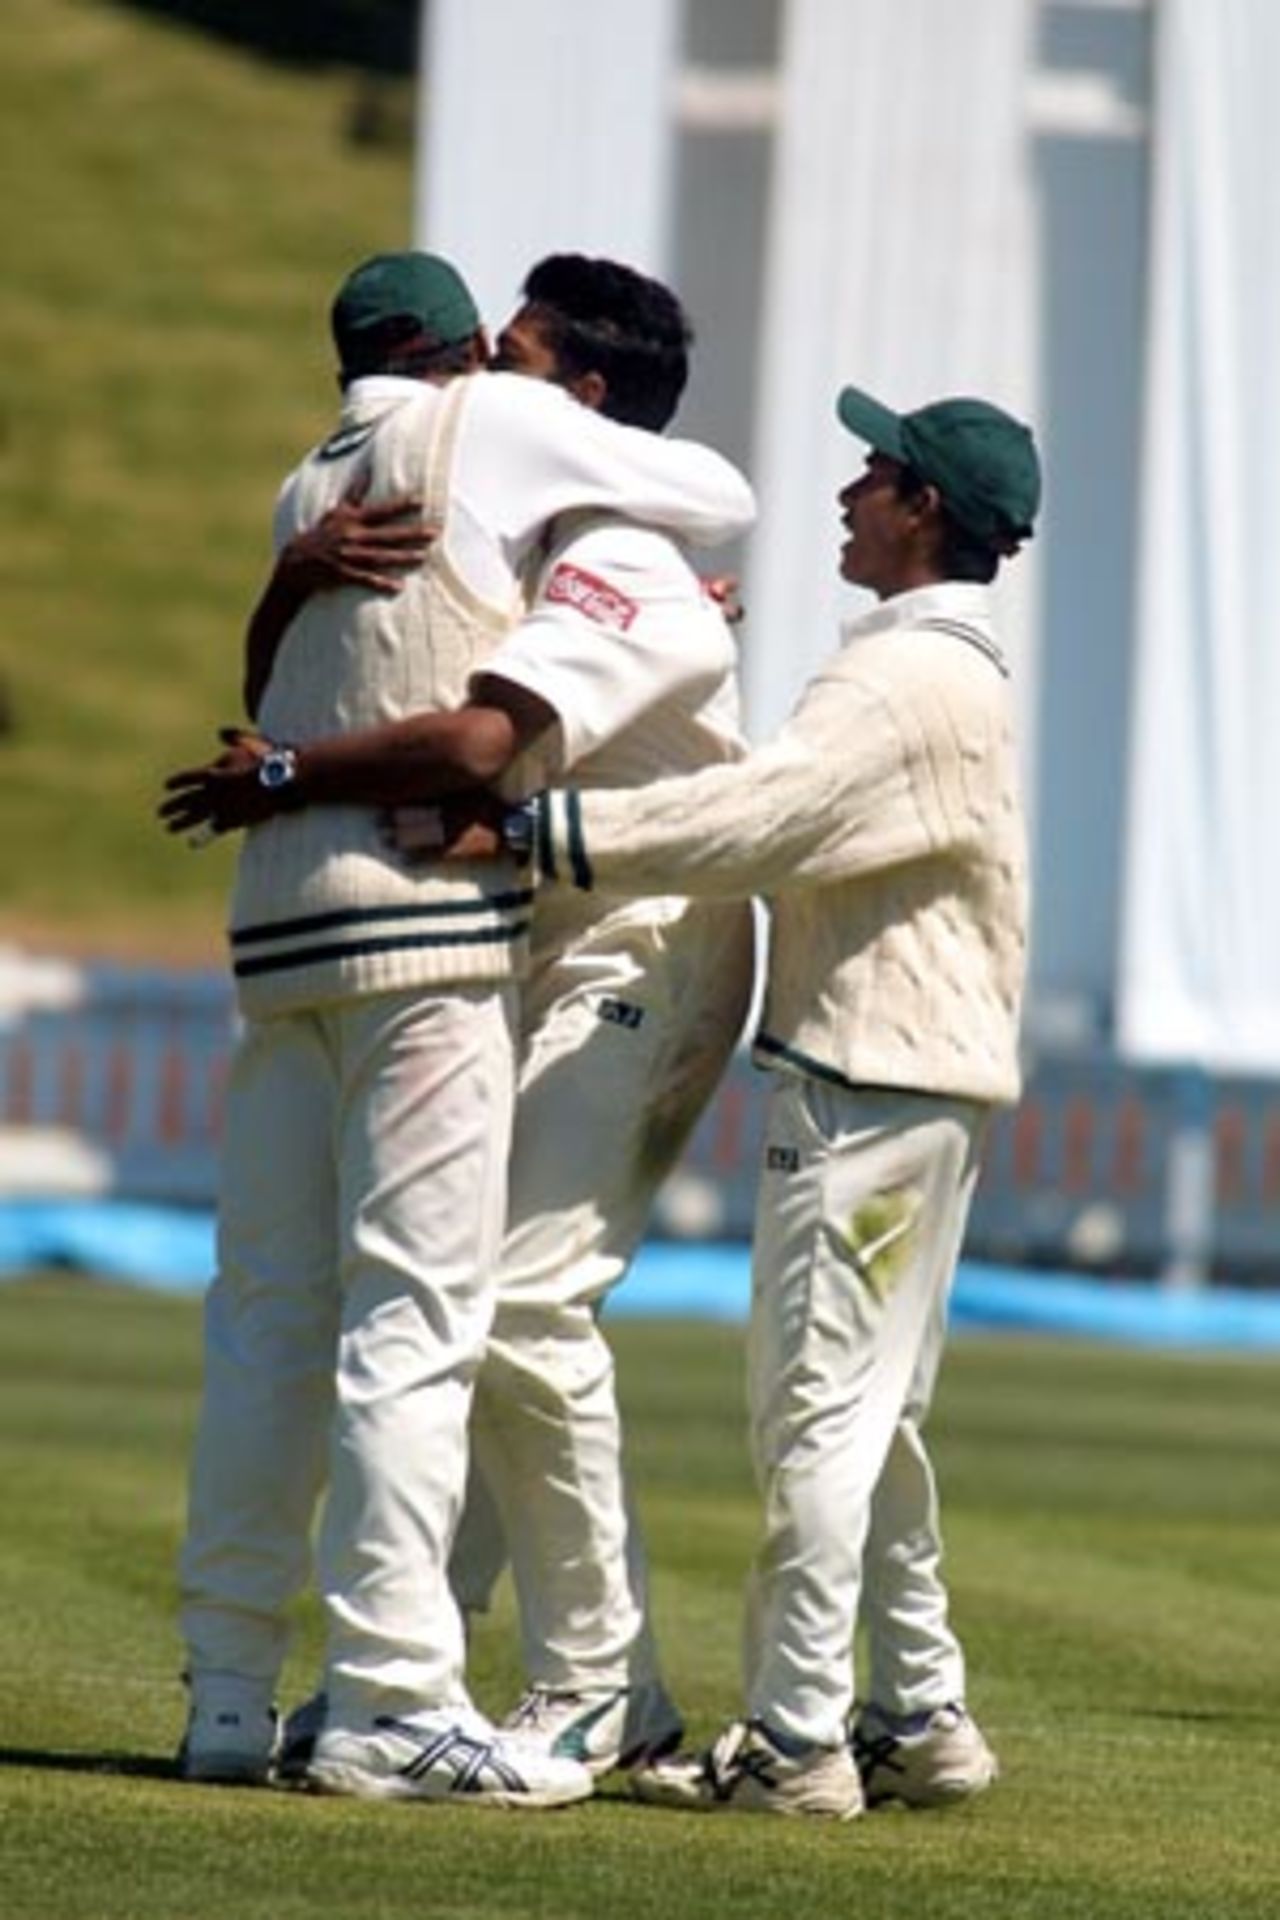 Bangladesh bowler Hasibul Hossain (centre) hugs Mashrafe Mortaza in celebration after dismissing New Zealand batsman Mark Richardson, caught by Mashrafe at mid on for 83. Captain Khaled Mashud (right) joins in the celebration. 2nd Test: New Zealand v Bangladesh at Basin Reserve, Wellington, 26-30 Dec 2001 (29 December 2001).